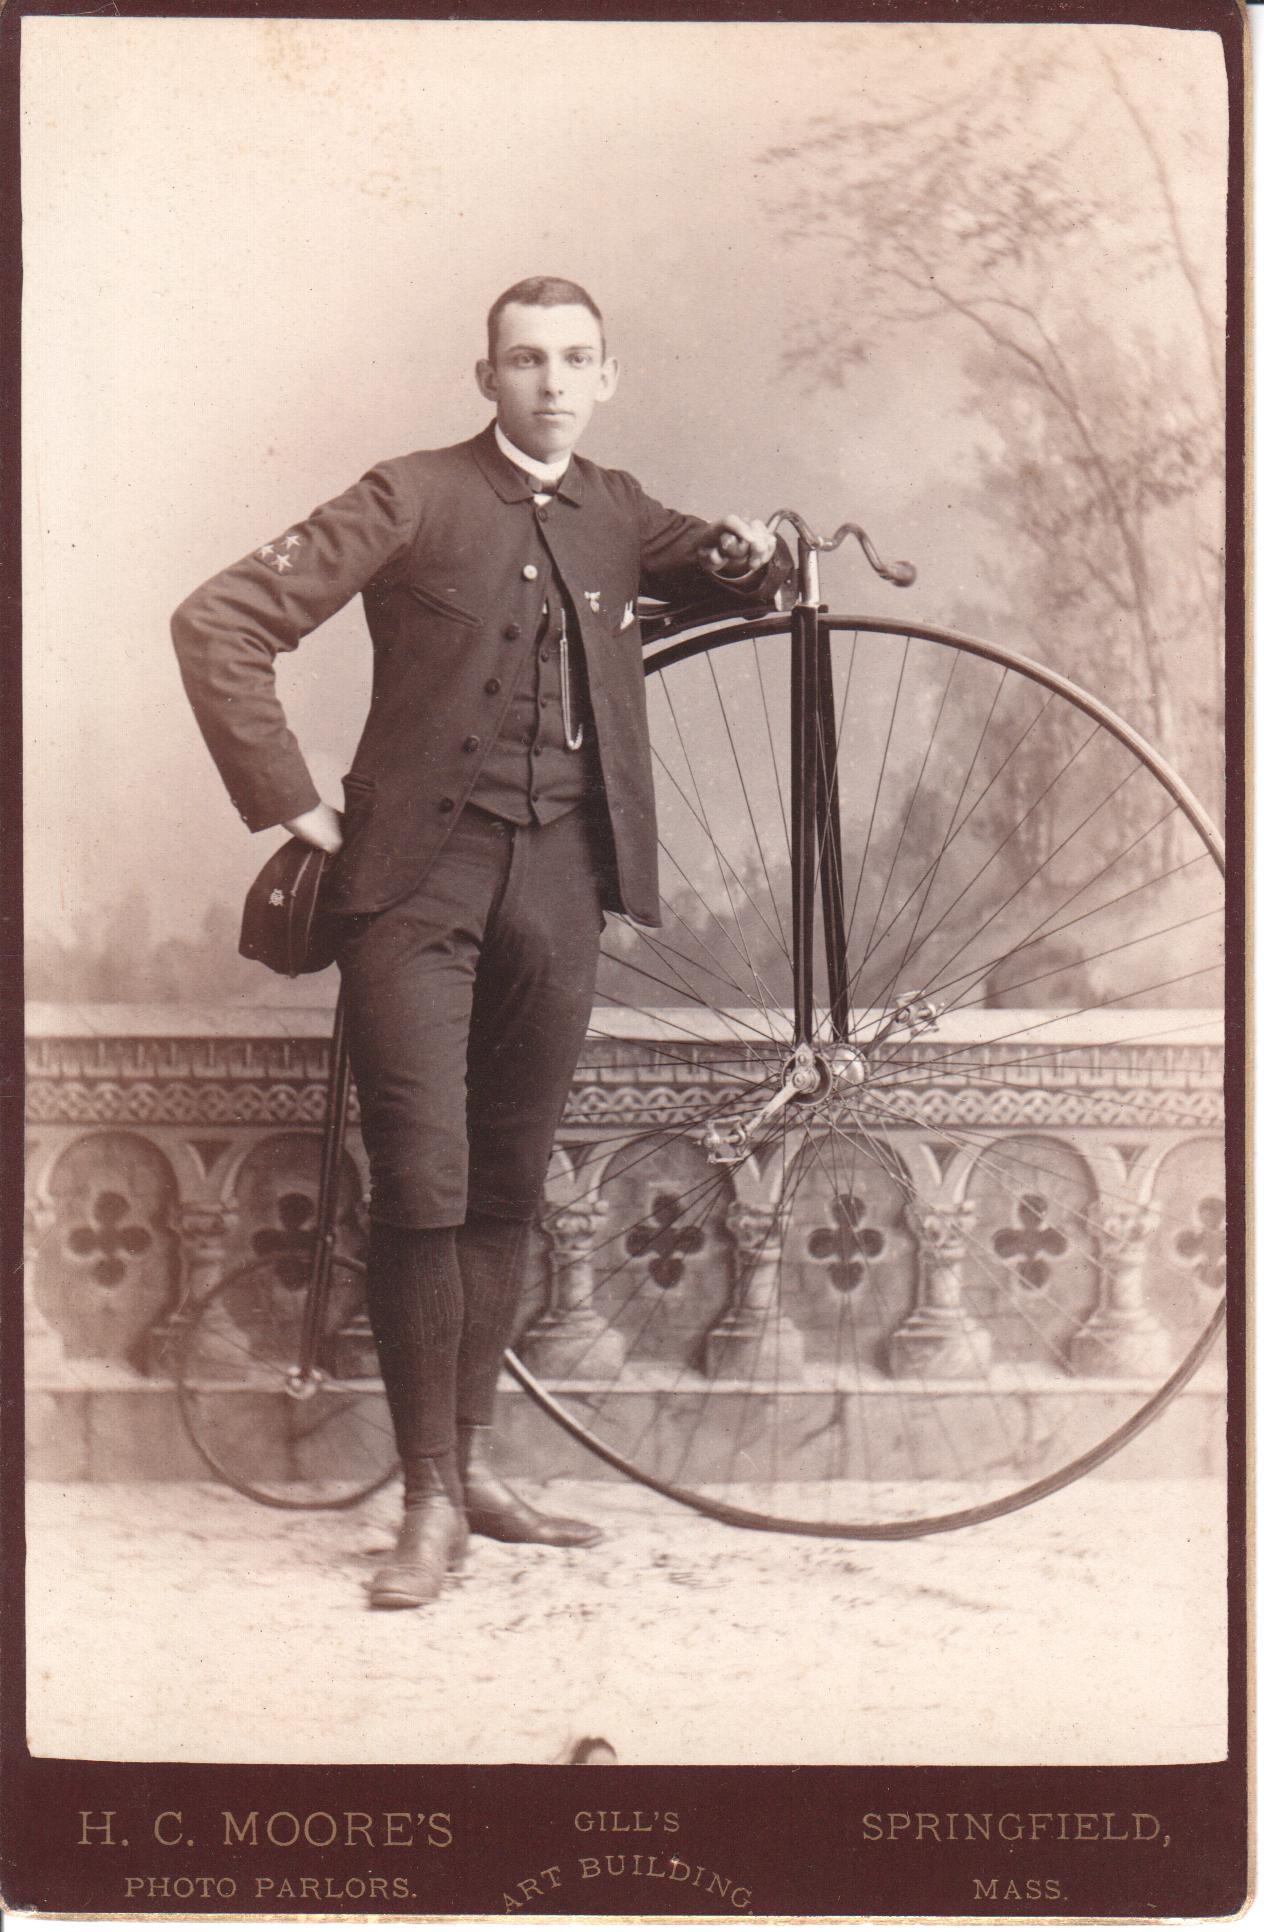 C.G. "Nele" Ross with Rudge Racer - Captain Rutland Bicycle Club, Rutland Vt. 1886